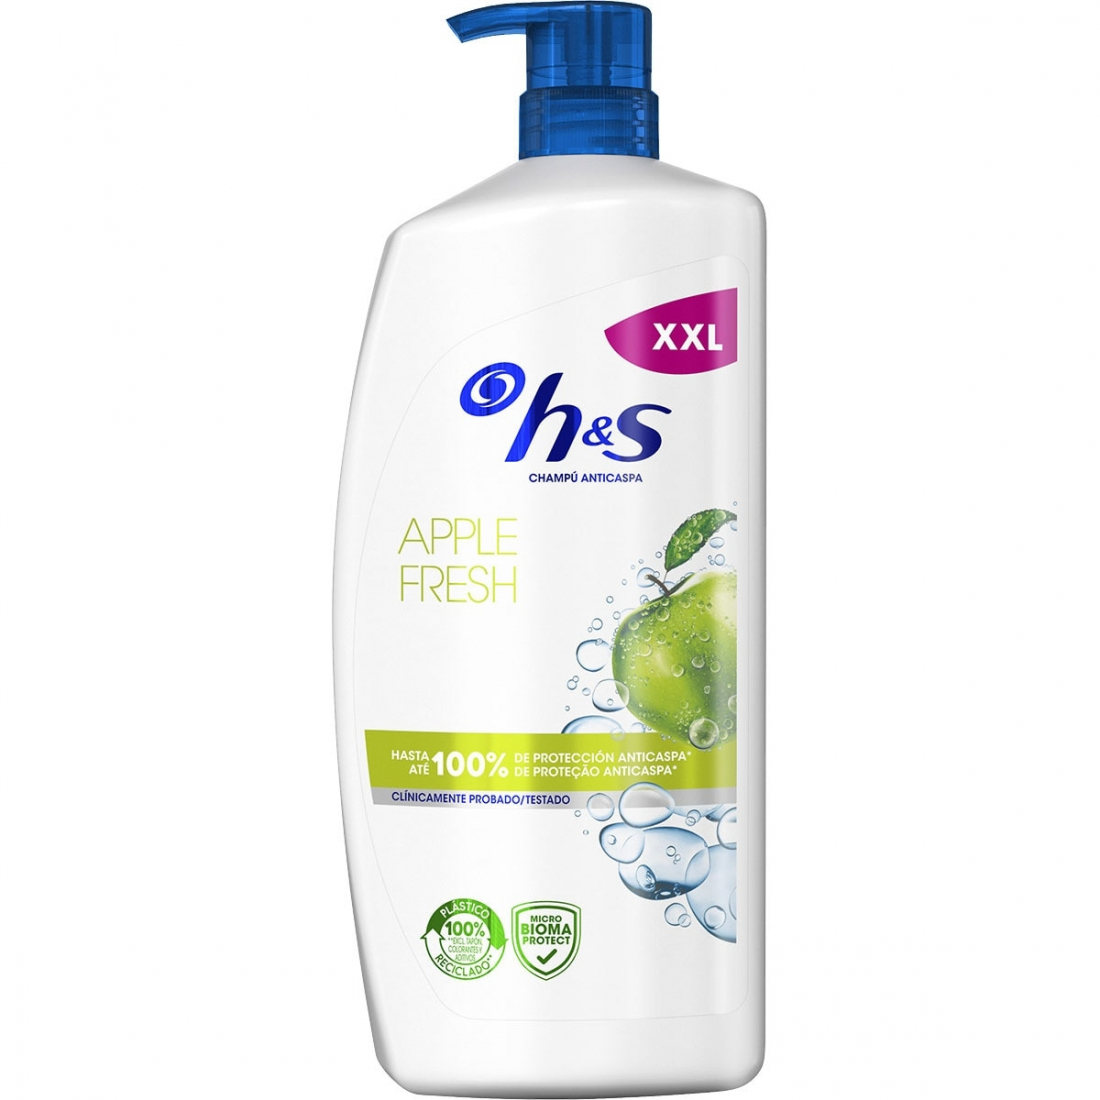 'Apple Fresh' Dandruff Shampoo - 1 L